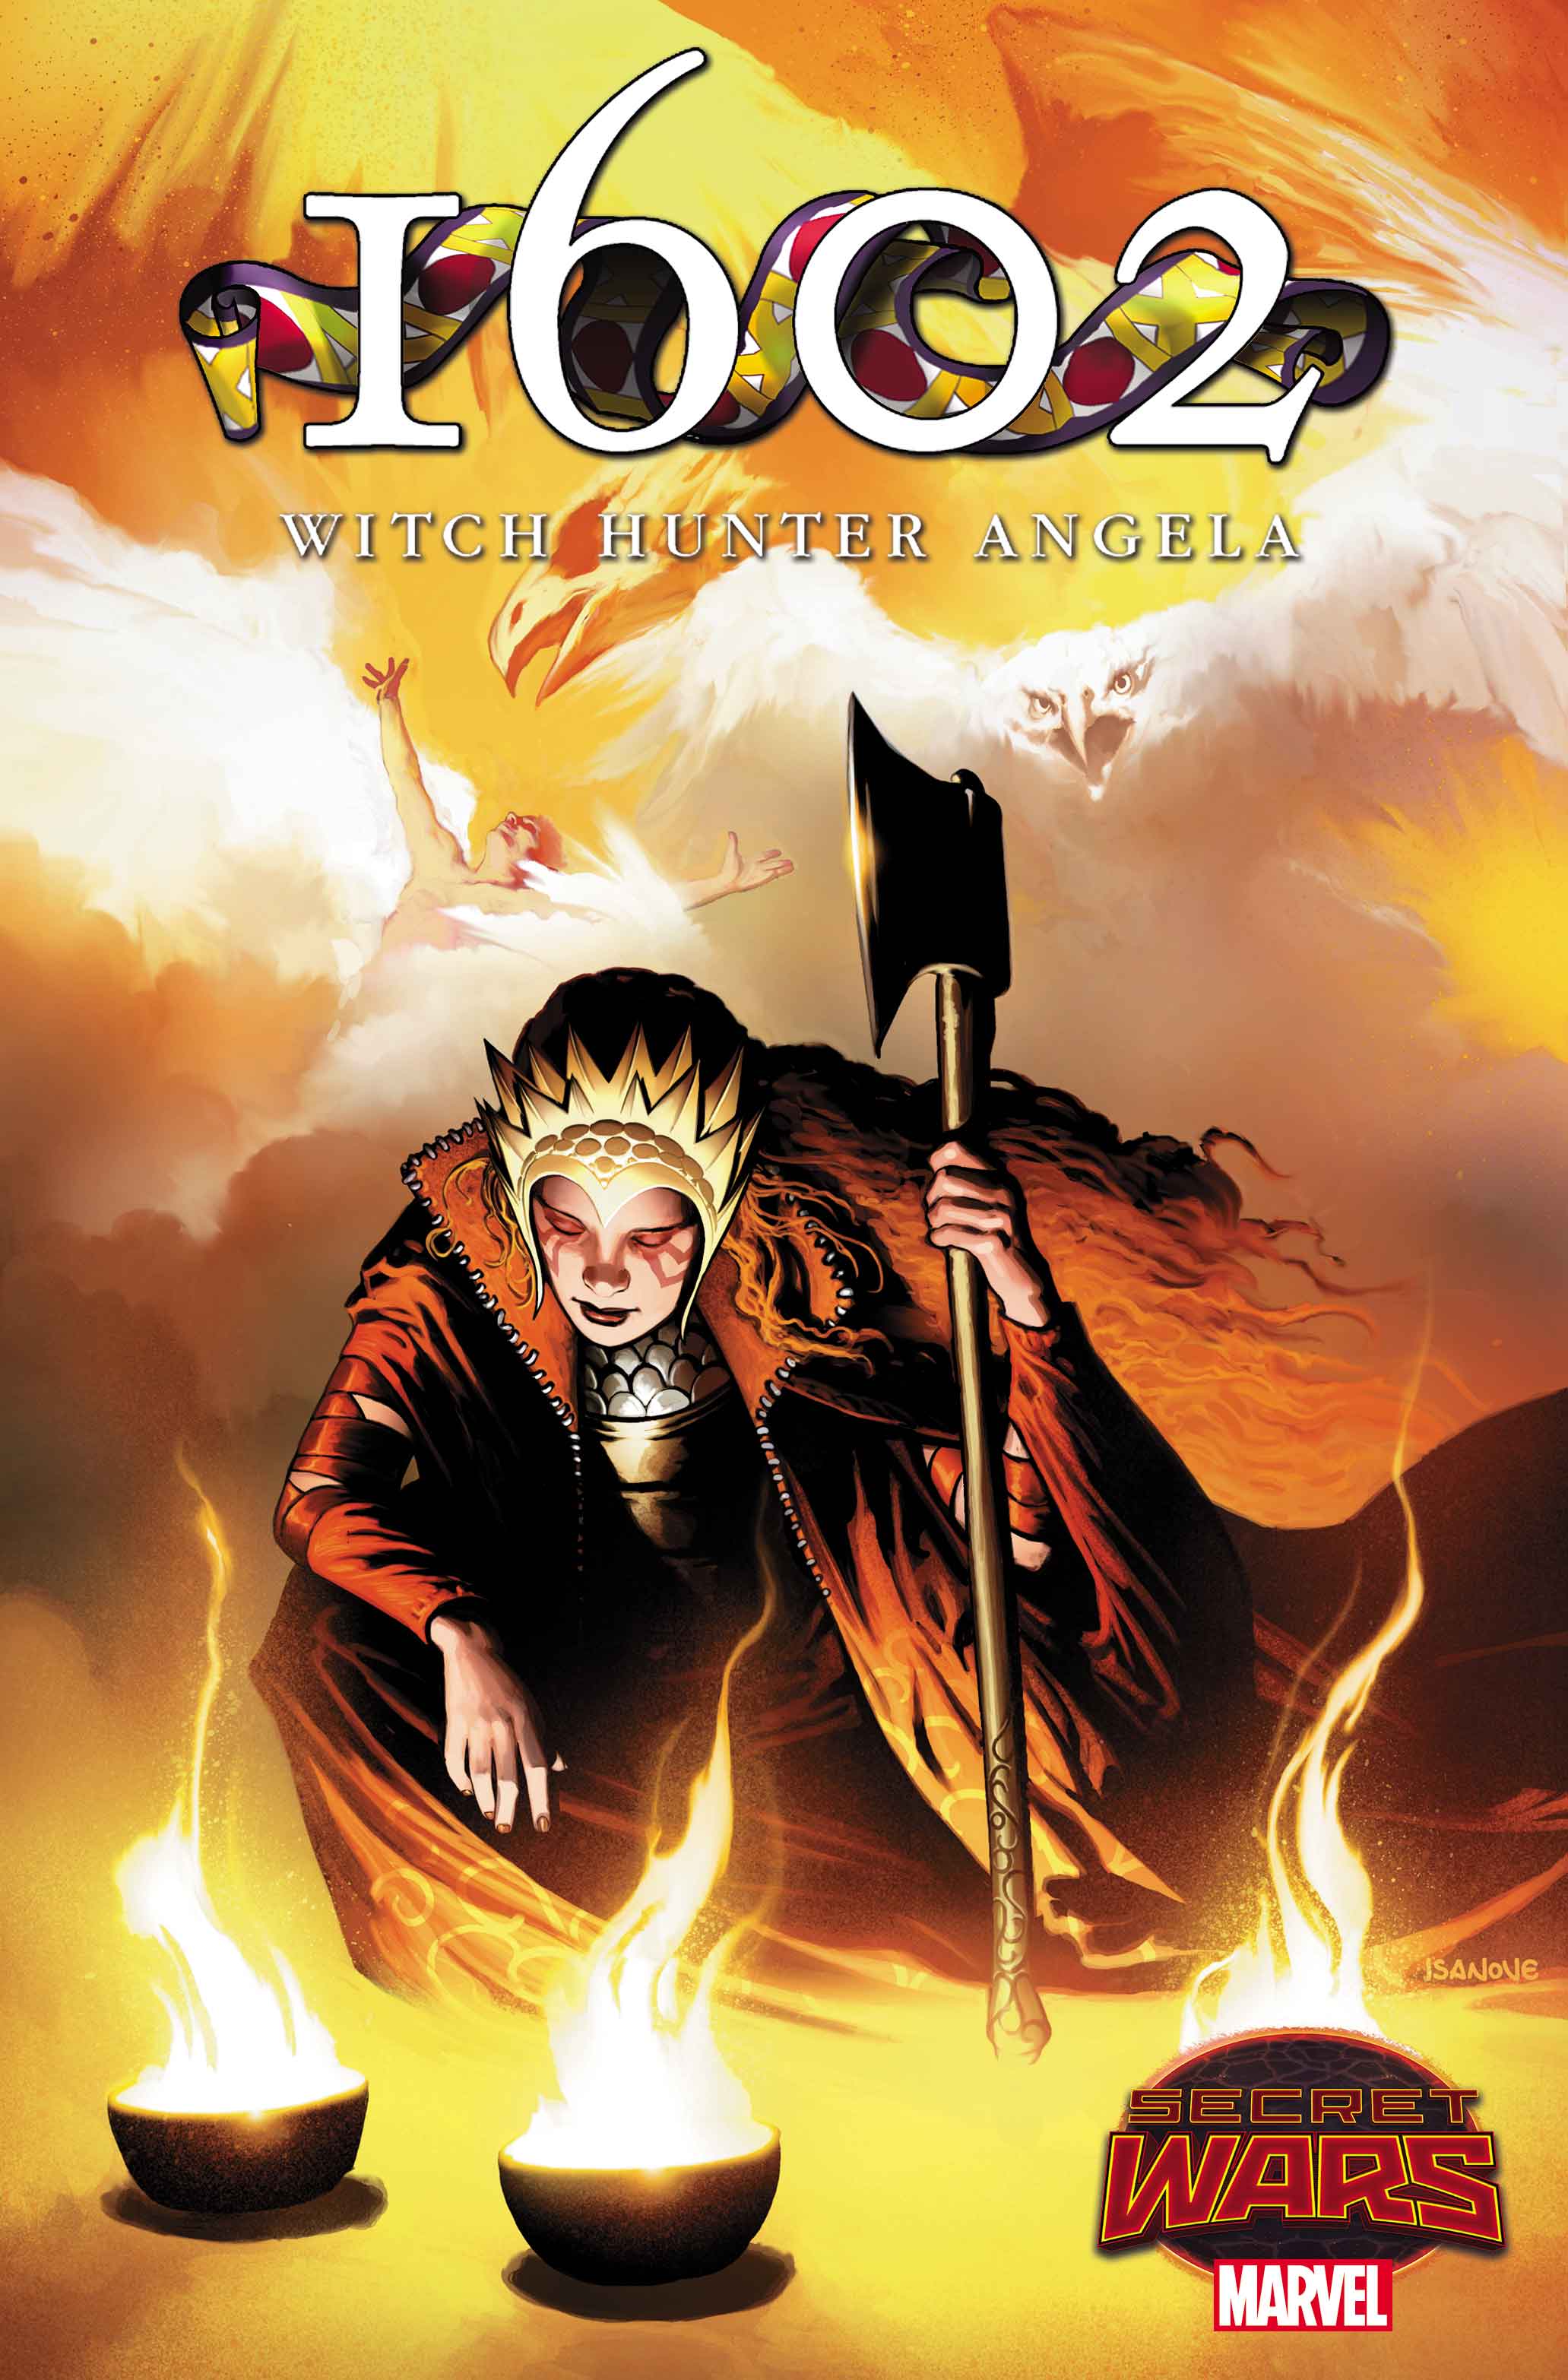 1602 Witch Hunter Angela (2015) #1 (Isanove Variant)